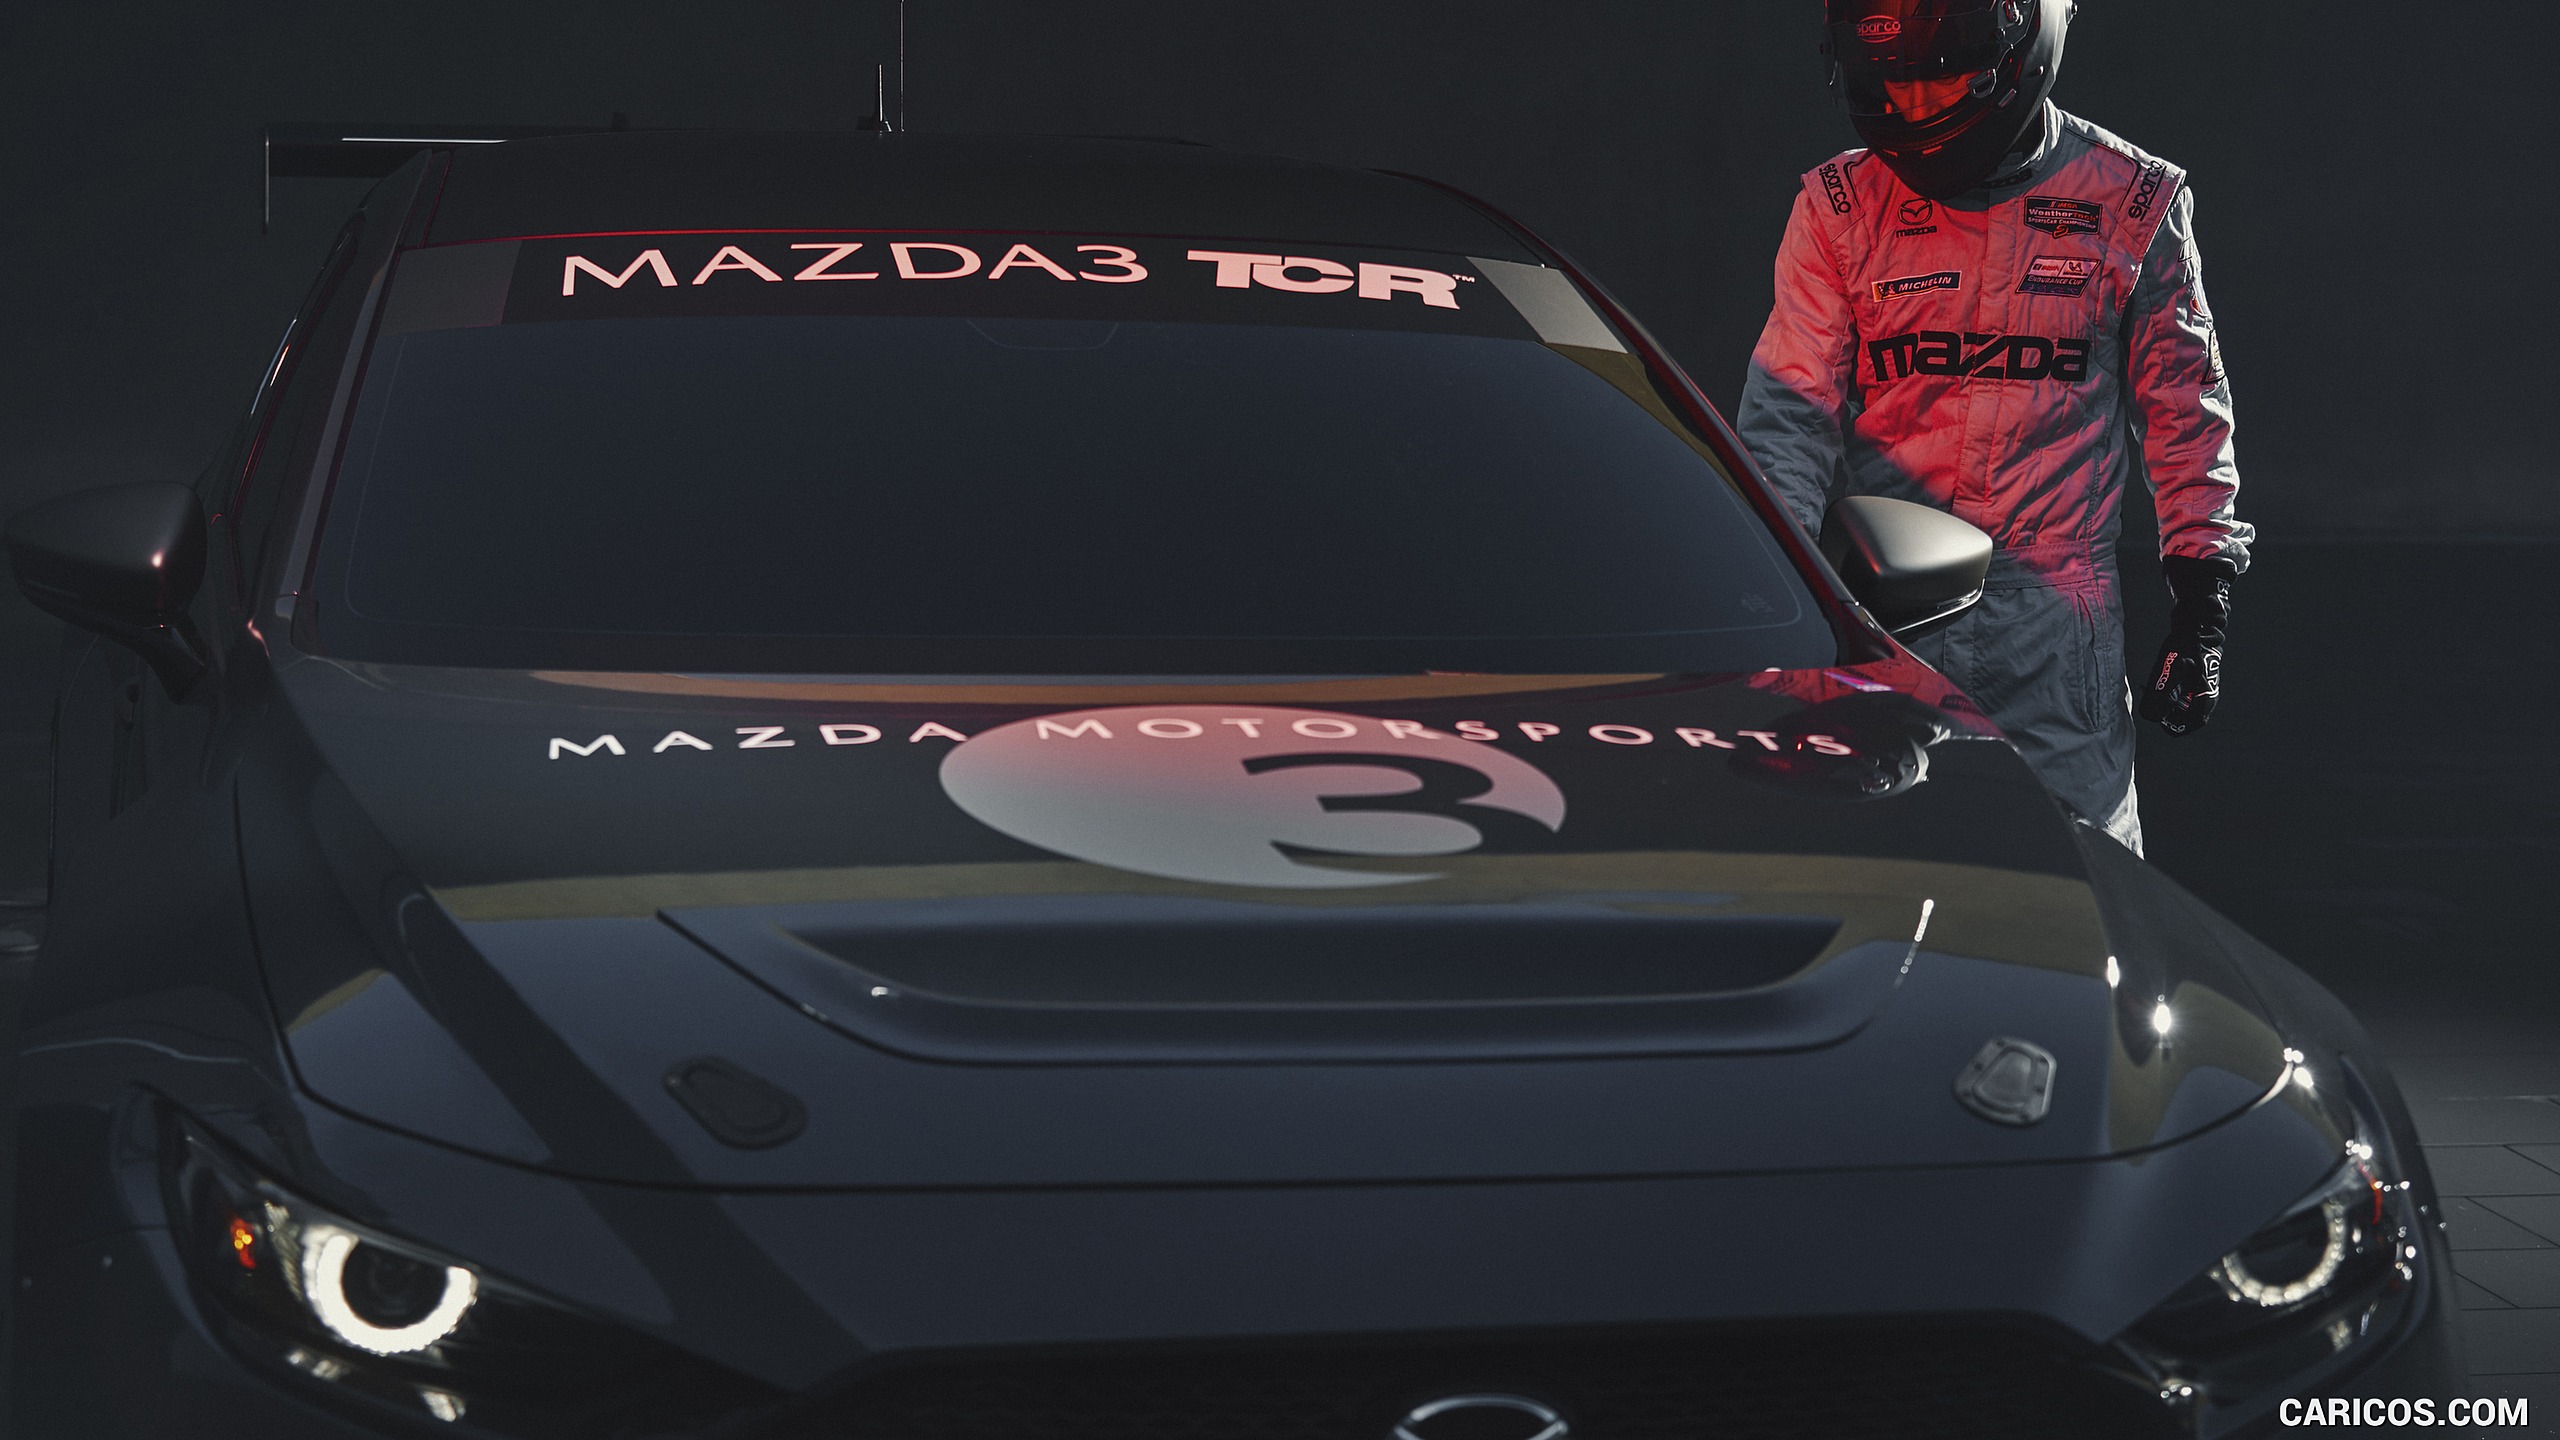 2020 Mazda3 TCR - Detail, #10 of 13